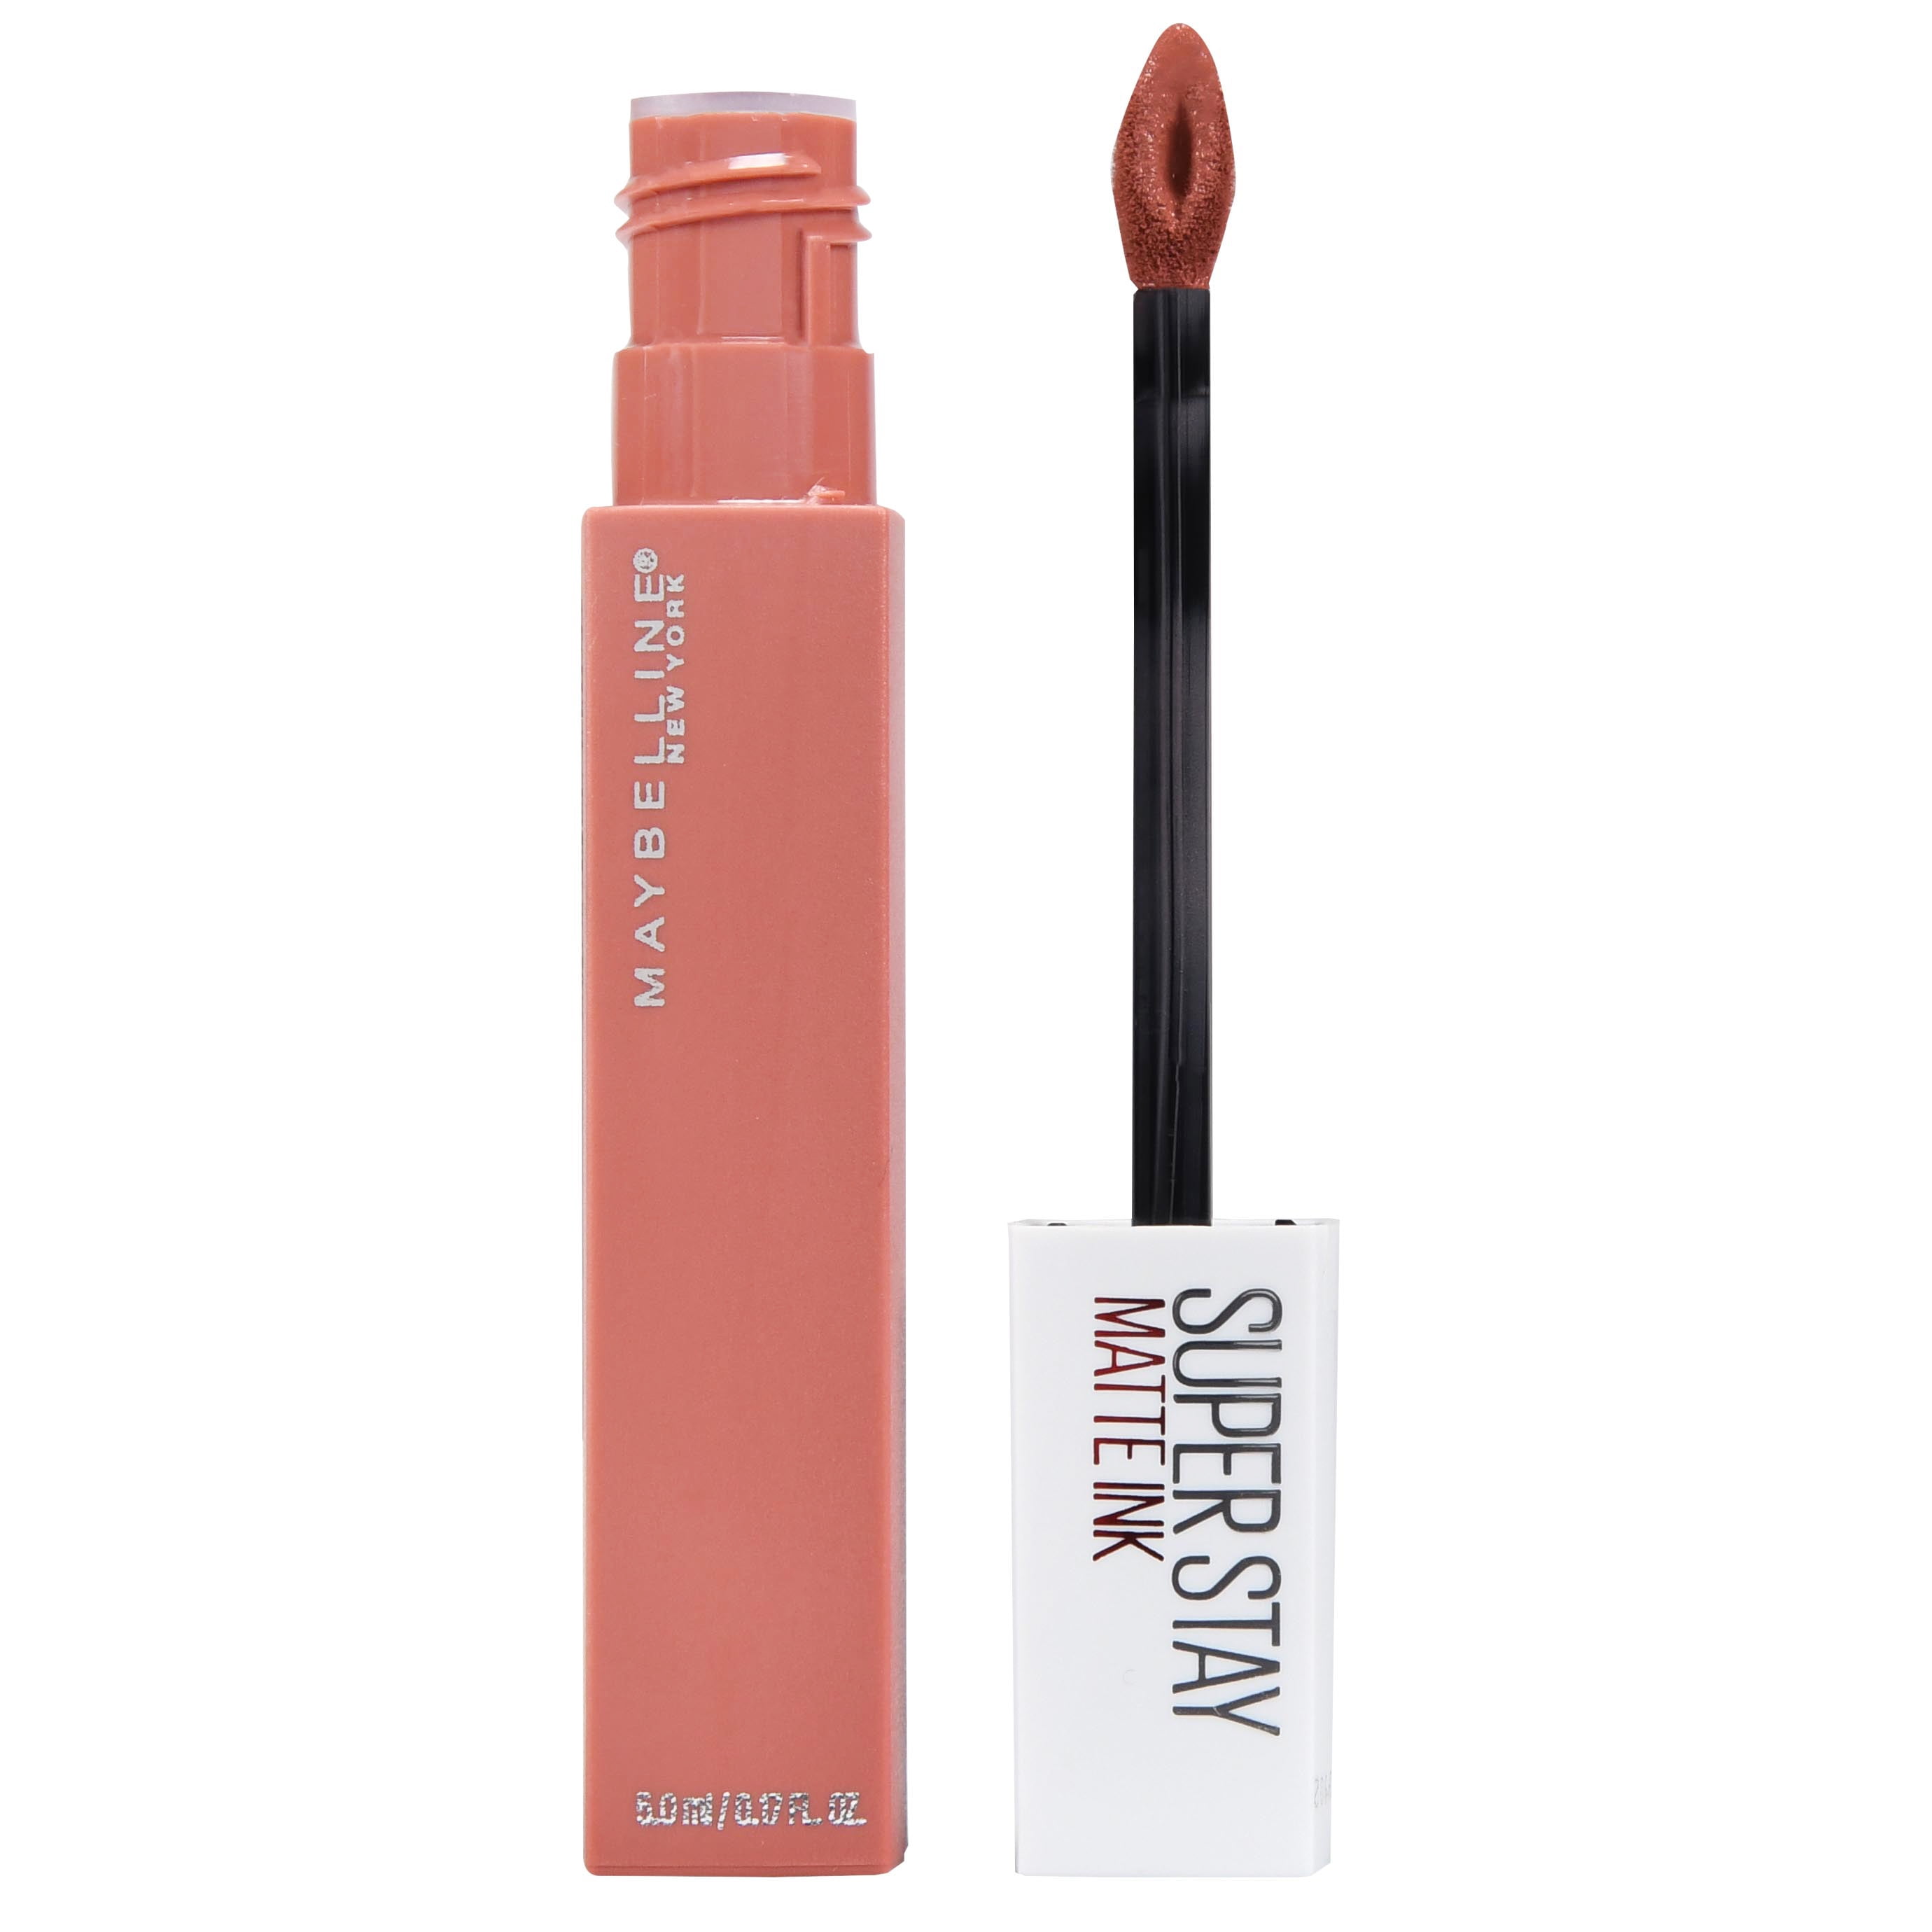 Maybelline SuperStay Matte Ink Un-nude Liquid Lipstick, Seductress, 0. ...